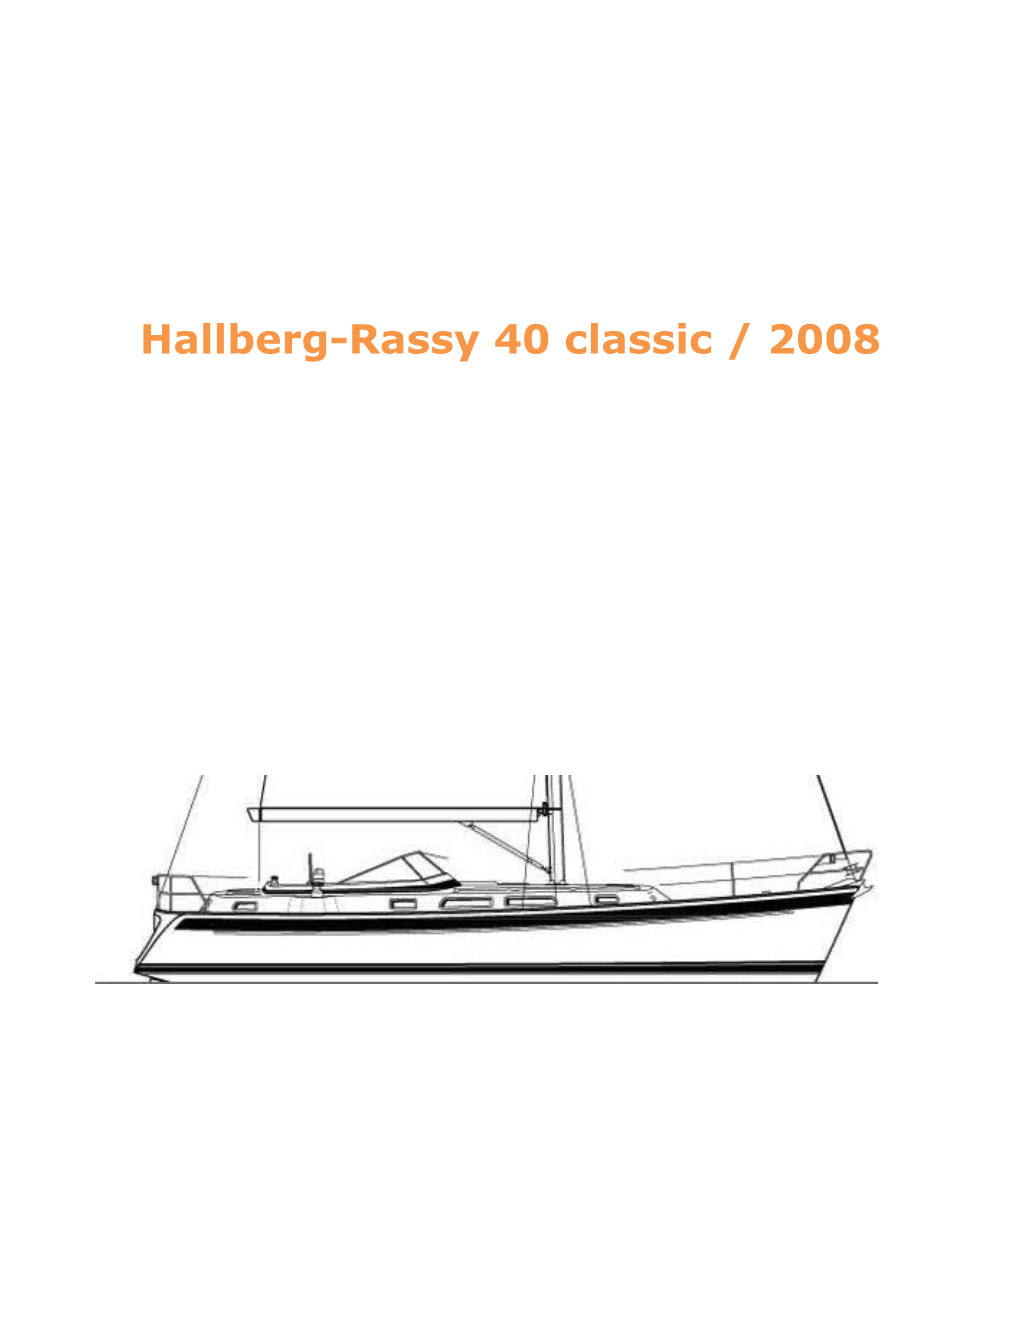 Hallberg-Rassy 40 Classic / 2008